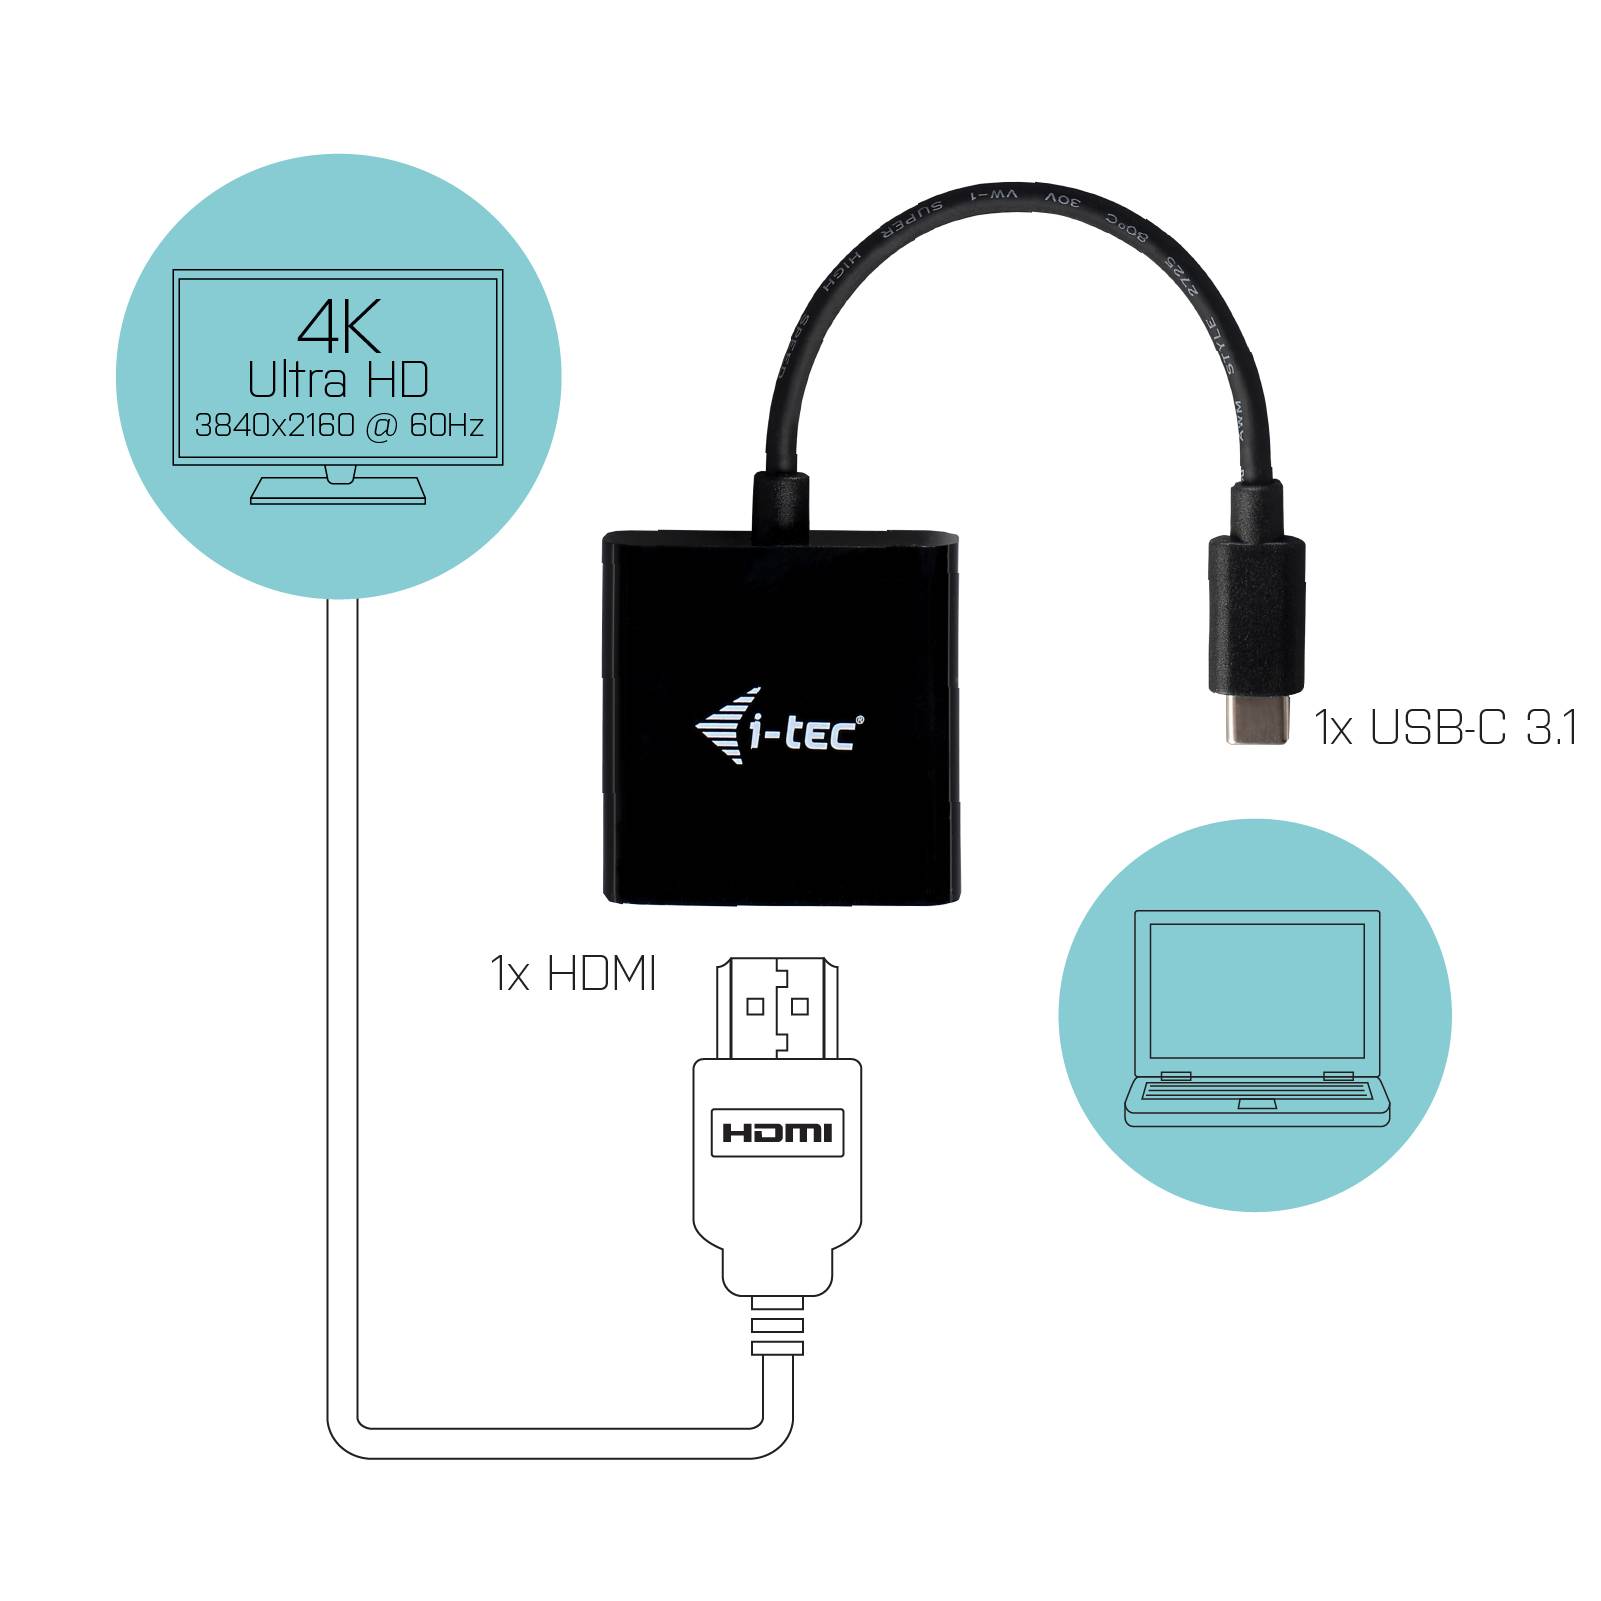 Rca Informatique - image du produit : I-TEC USB-C HDMI ADAPTER 4K/60 I-TEC USB-C HDMI ADAPTER 4K/60